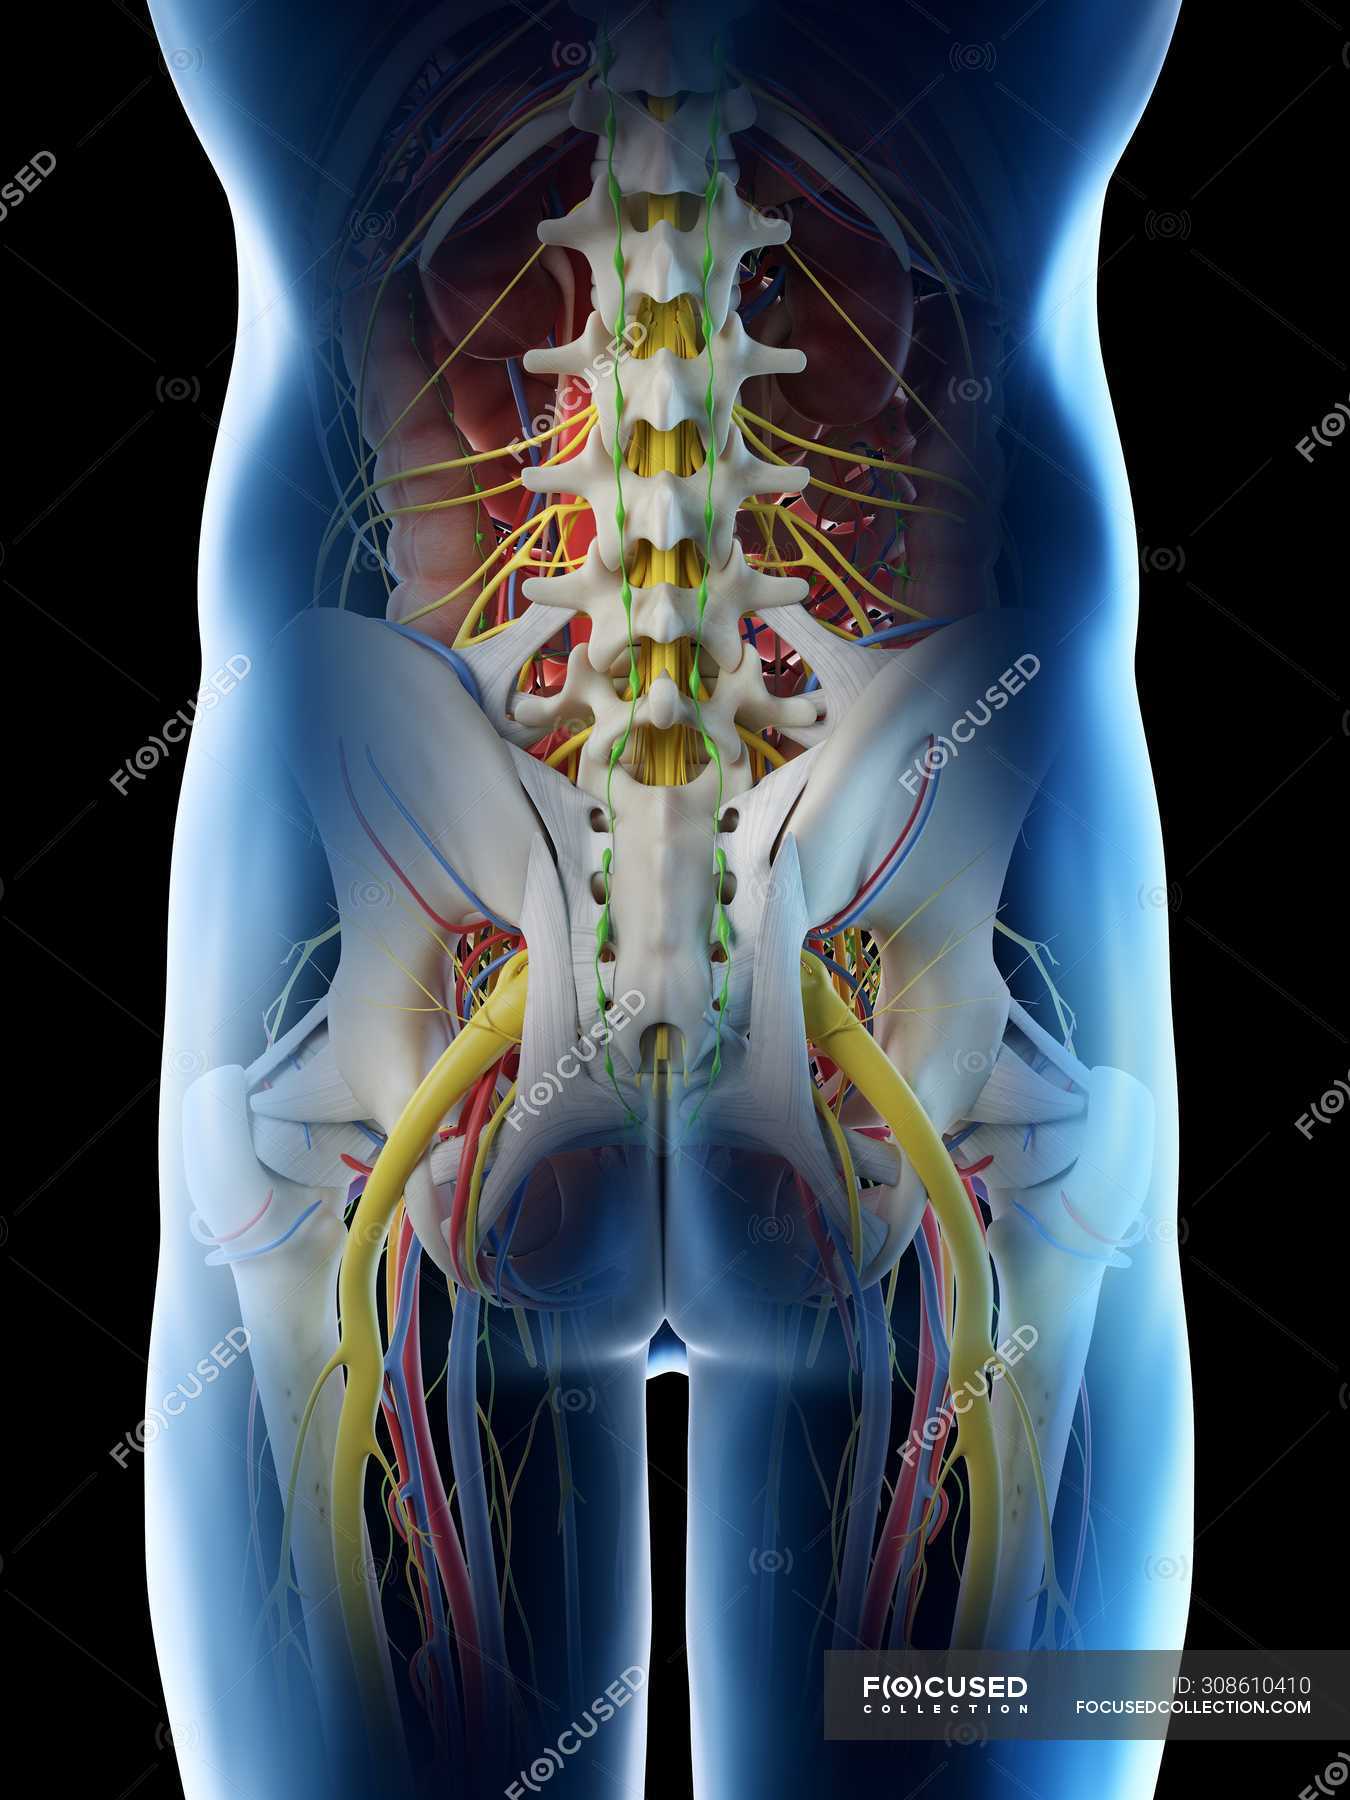 Male Pelvis Anatomy Digital Illustration Human Anatomy Graphic Stock Photo 308610410